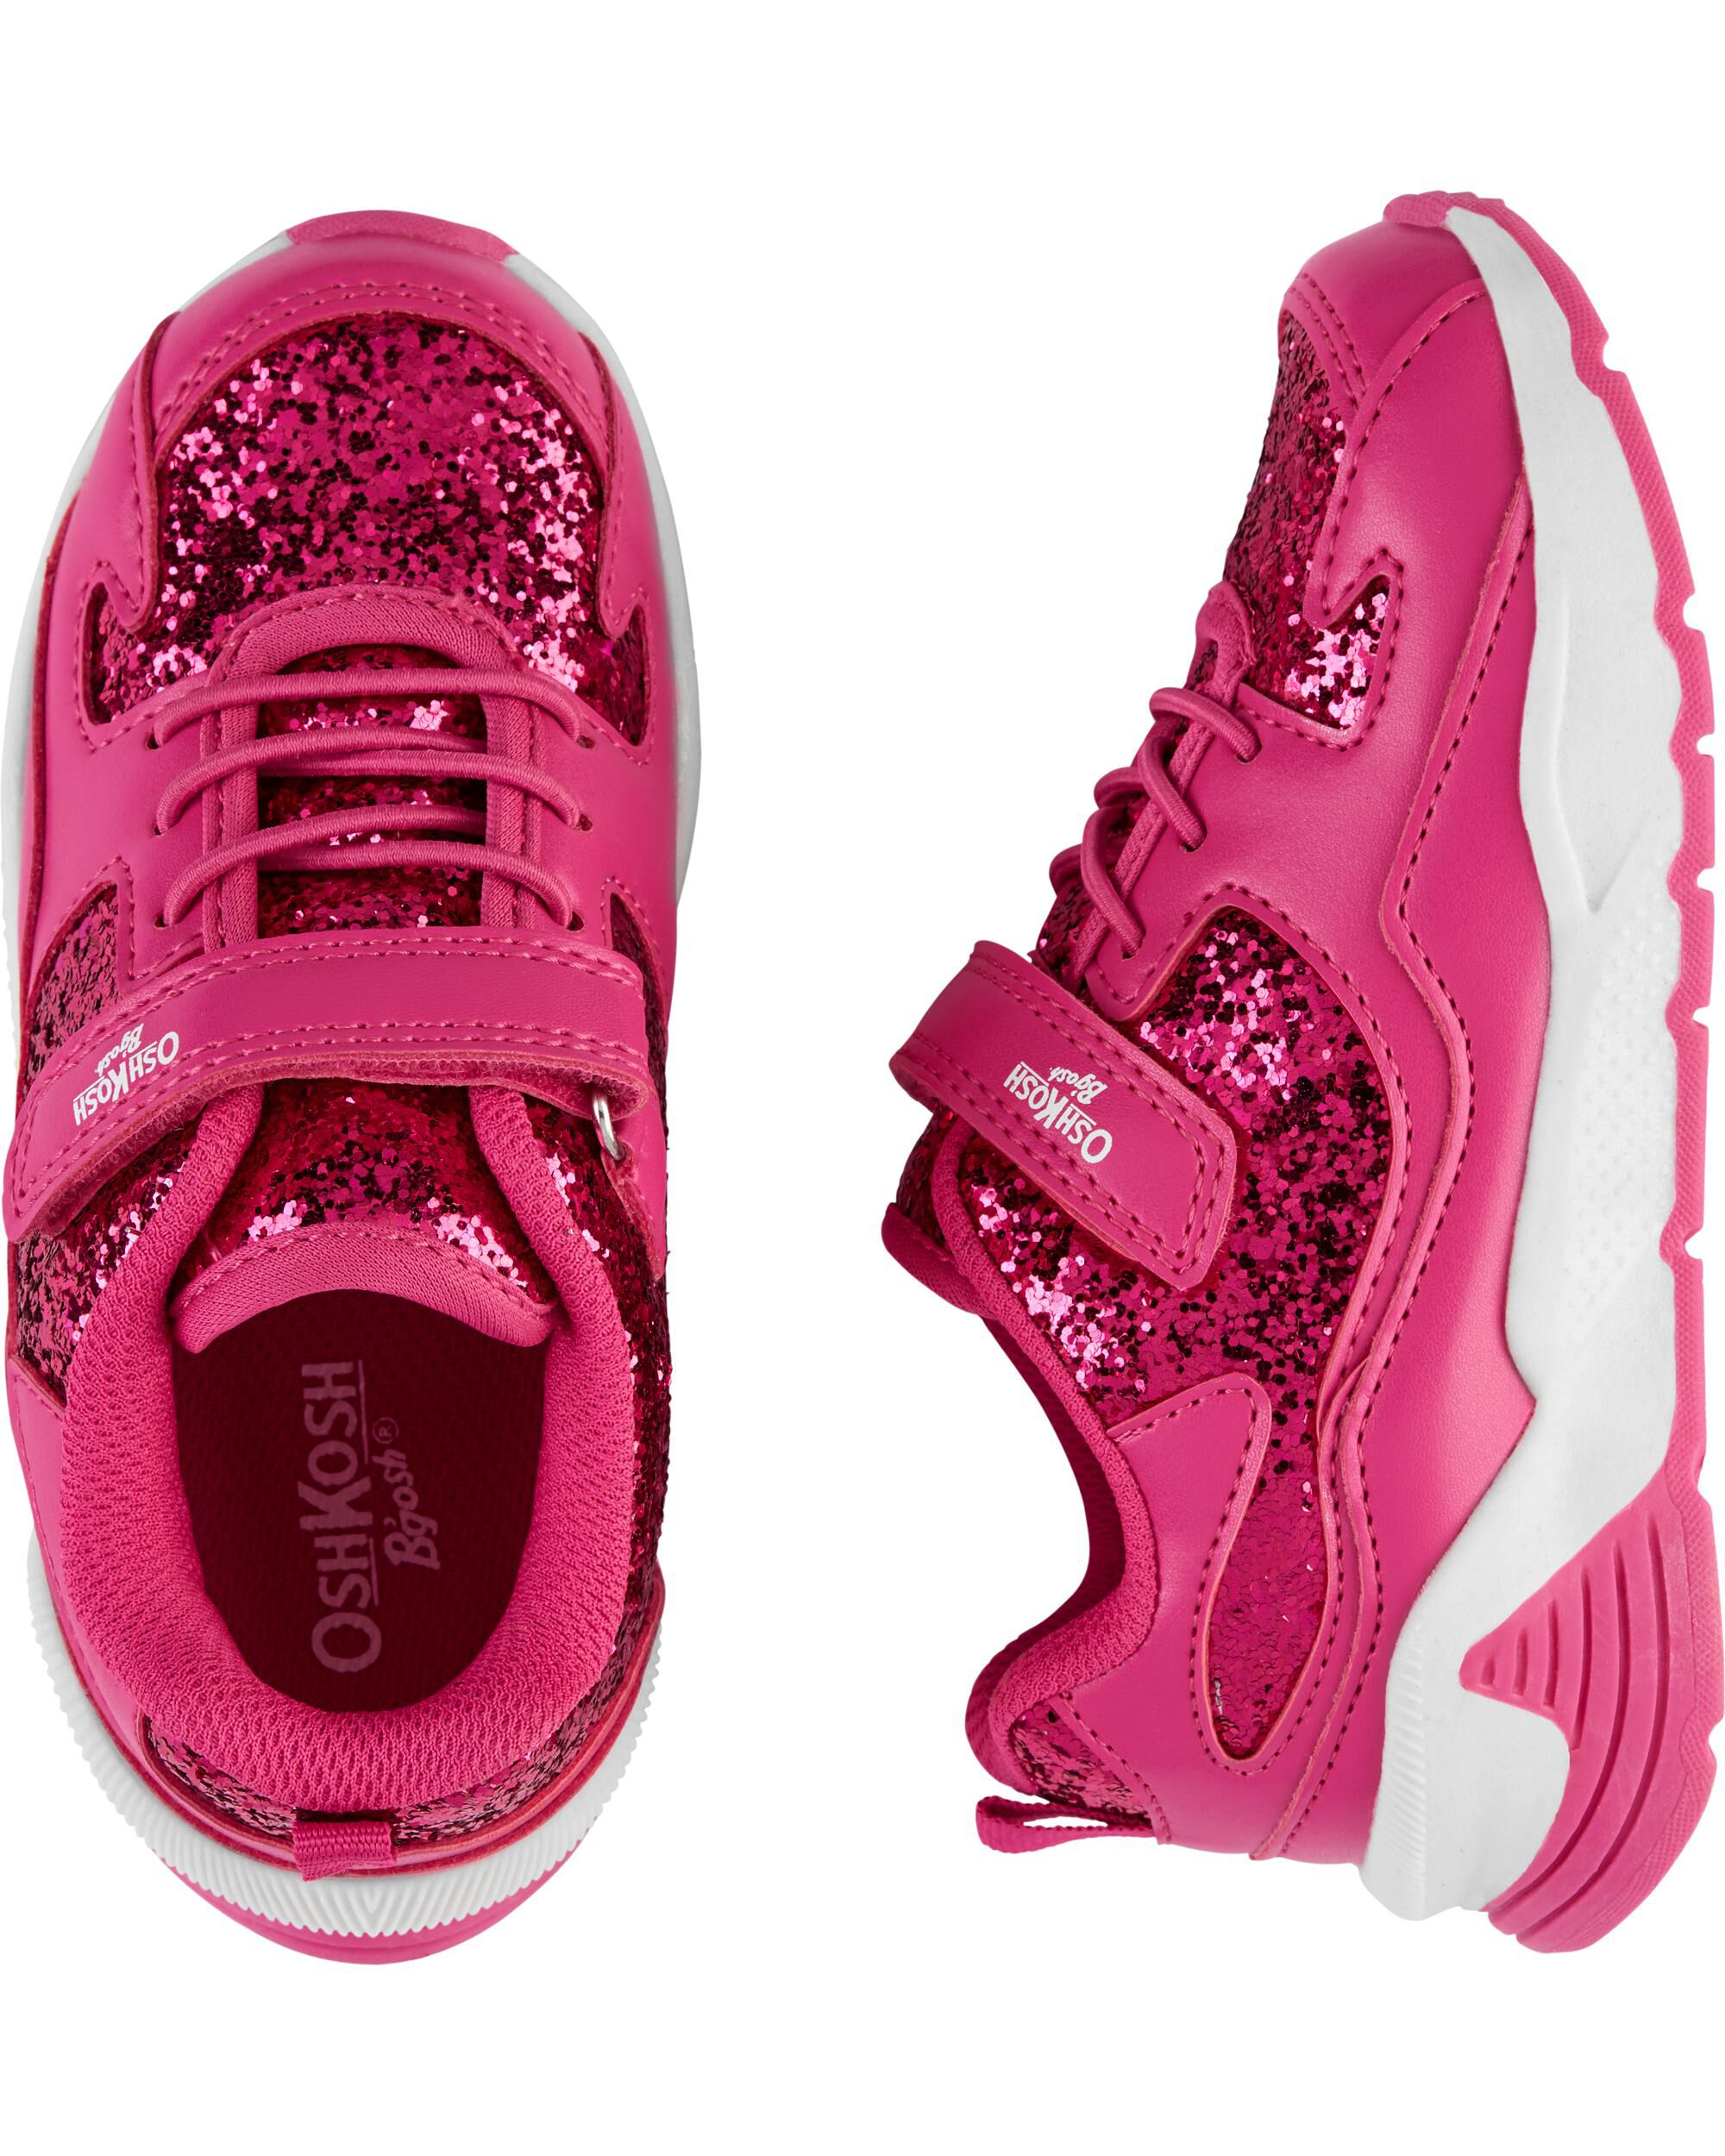 pink glitter tennis shoes